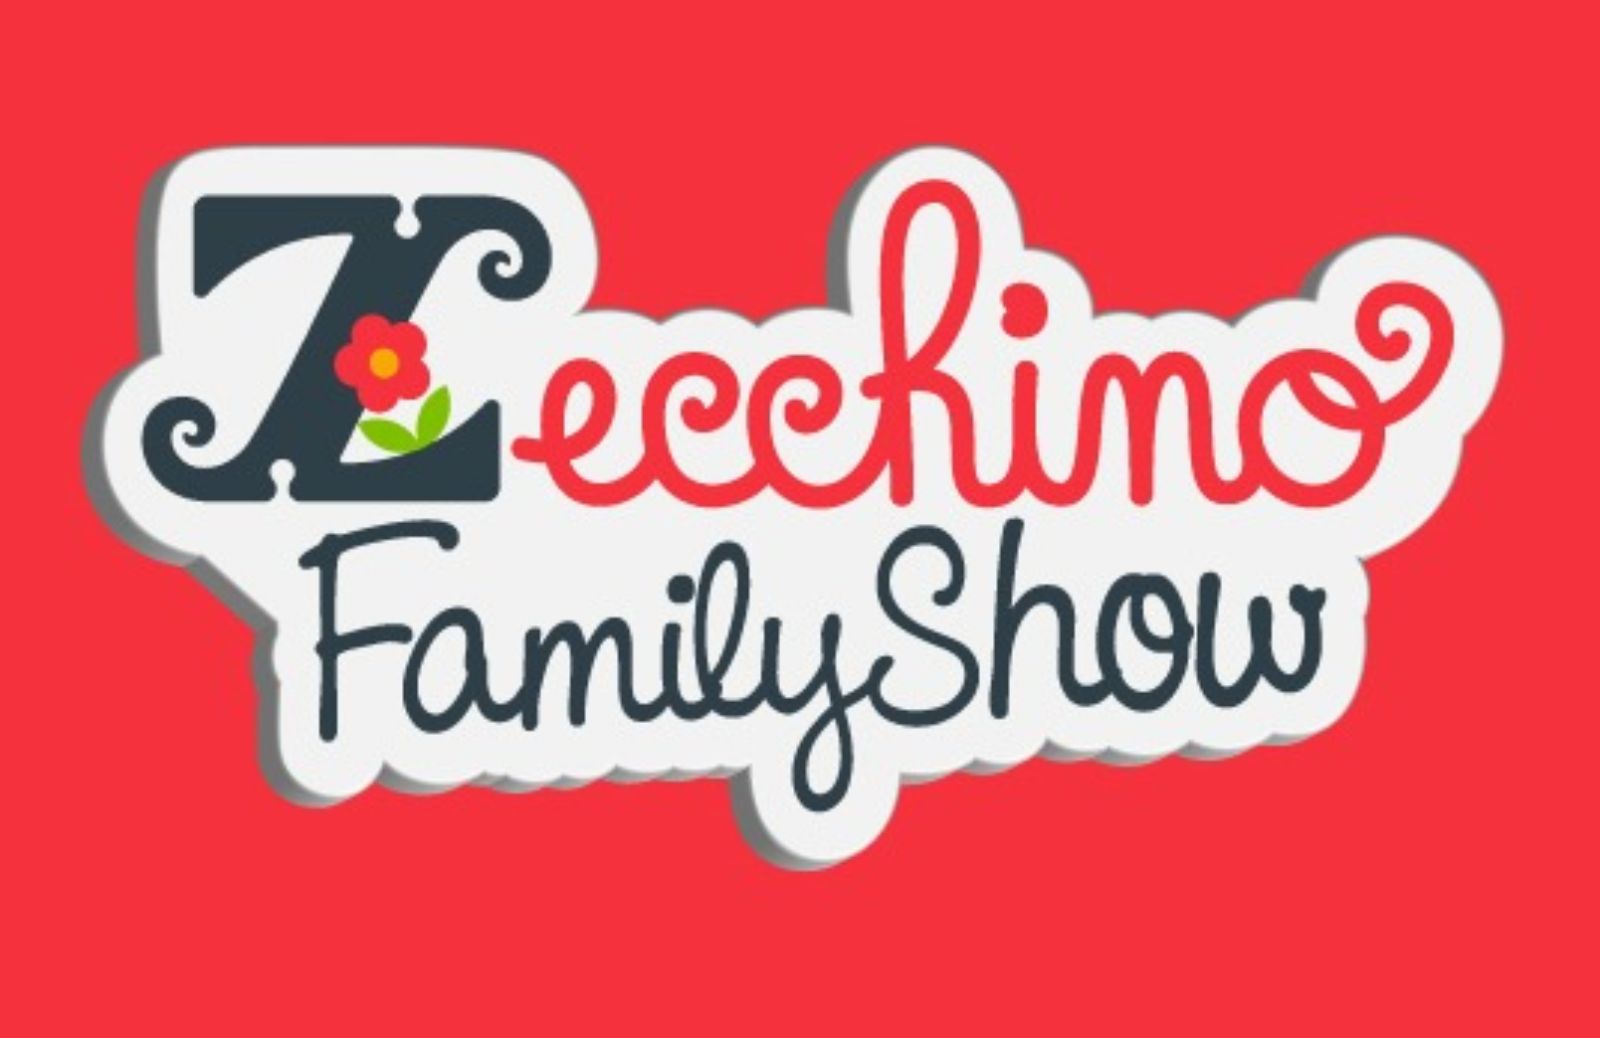 Zecchino Family Show in arrivo su DeAJunior